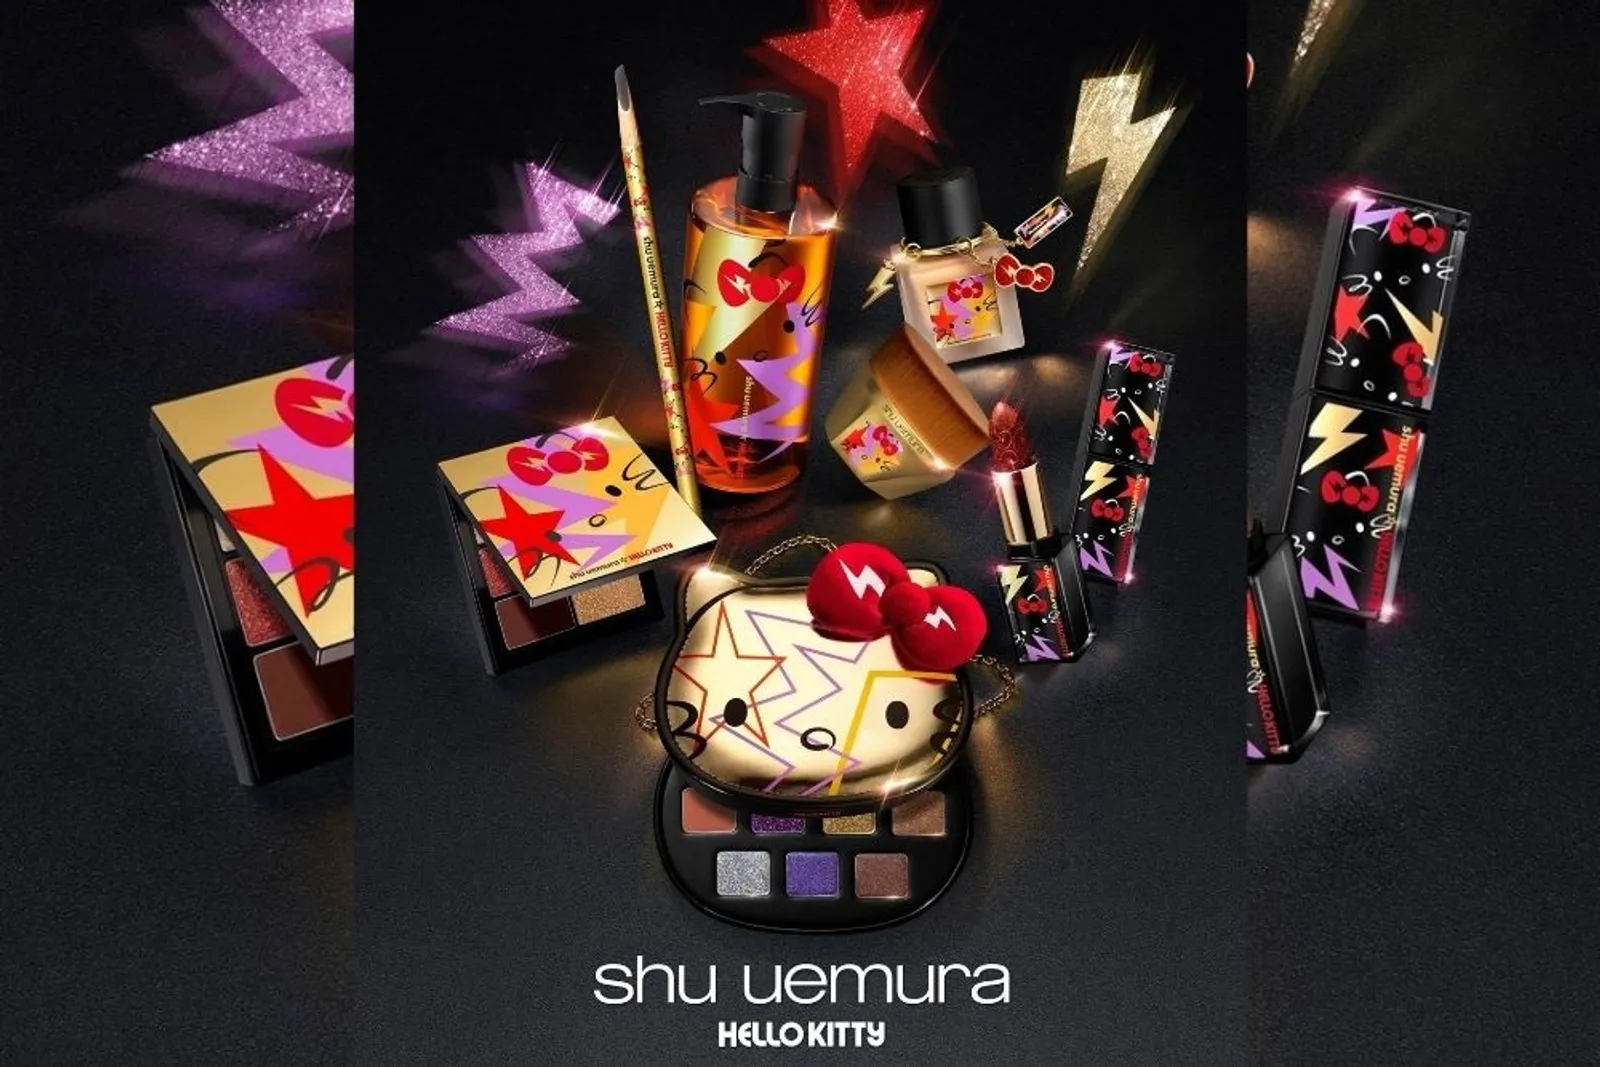 Ini Koleksi Gemas dari Shu Uemura yang Cocok untuk Rayakan Akhir Tahun